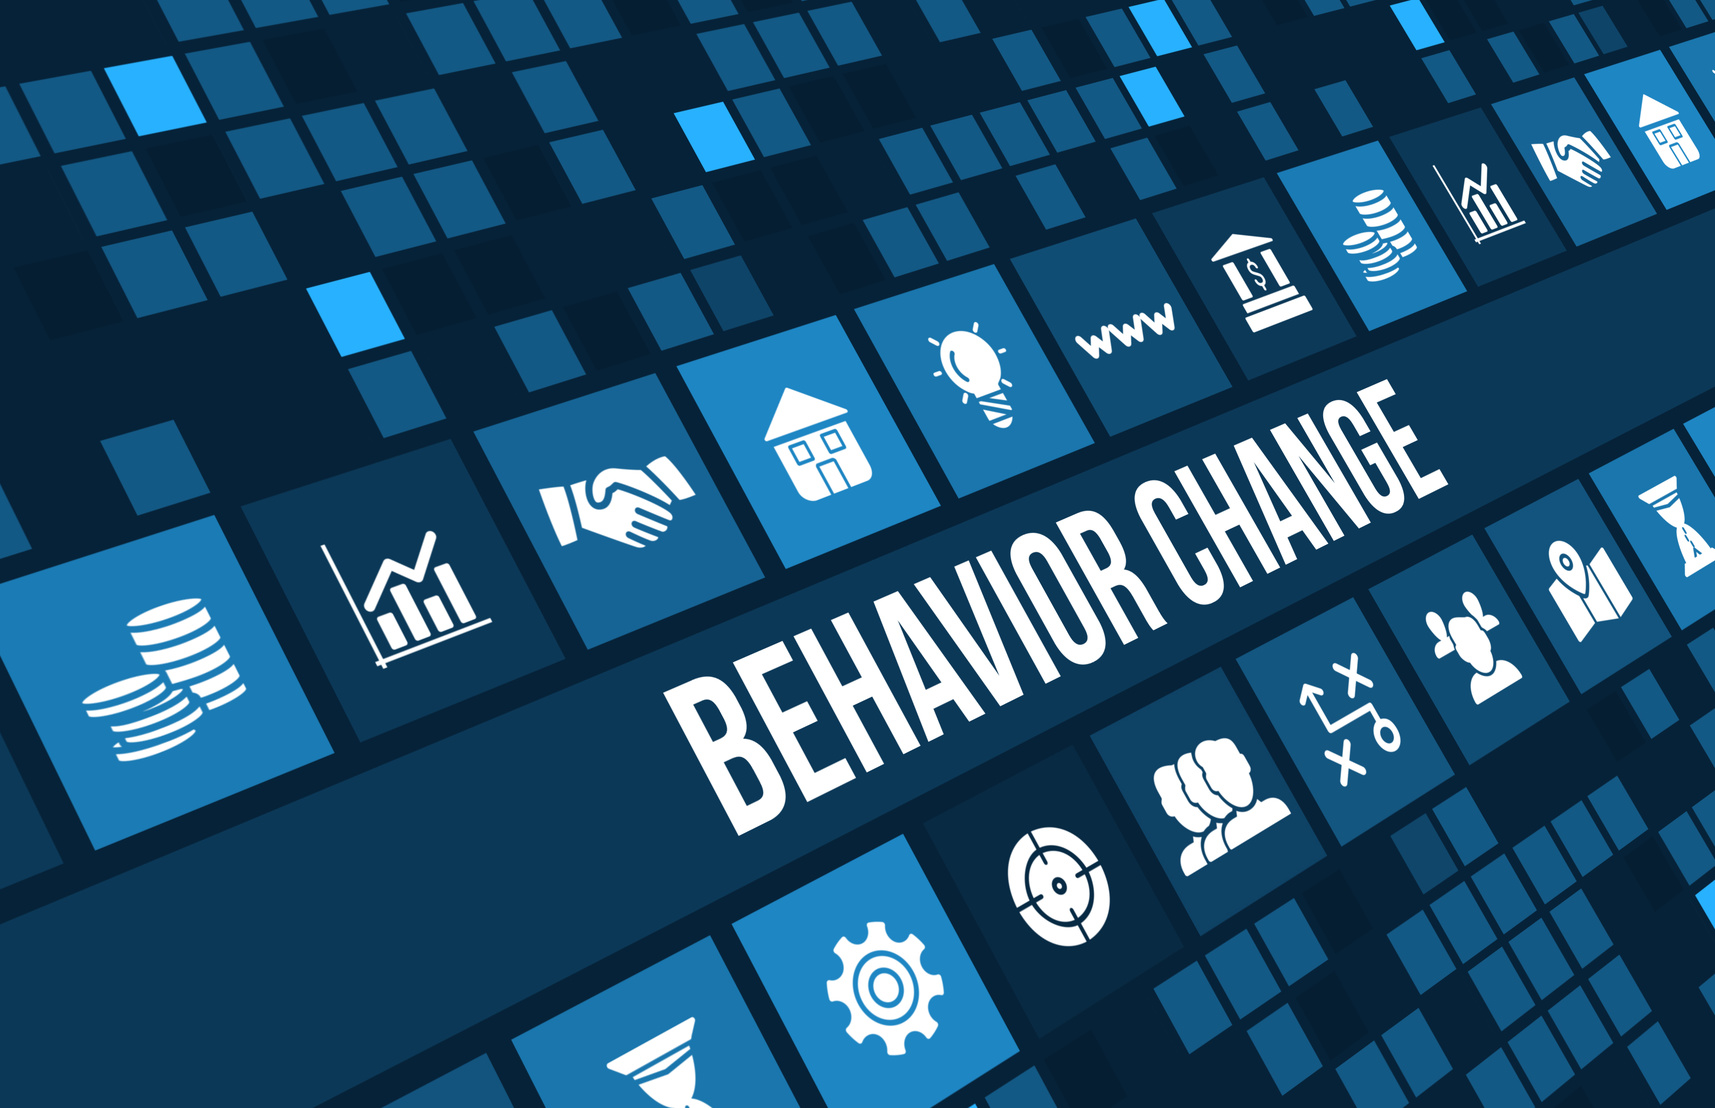 Behavior Change in the Digital Era – An Applied Framework for Evolving Culture